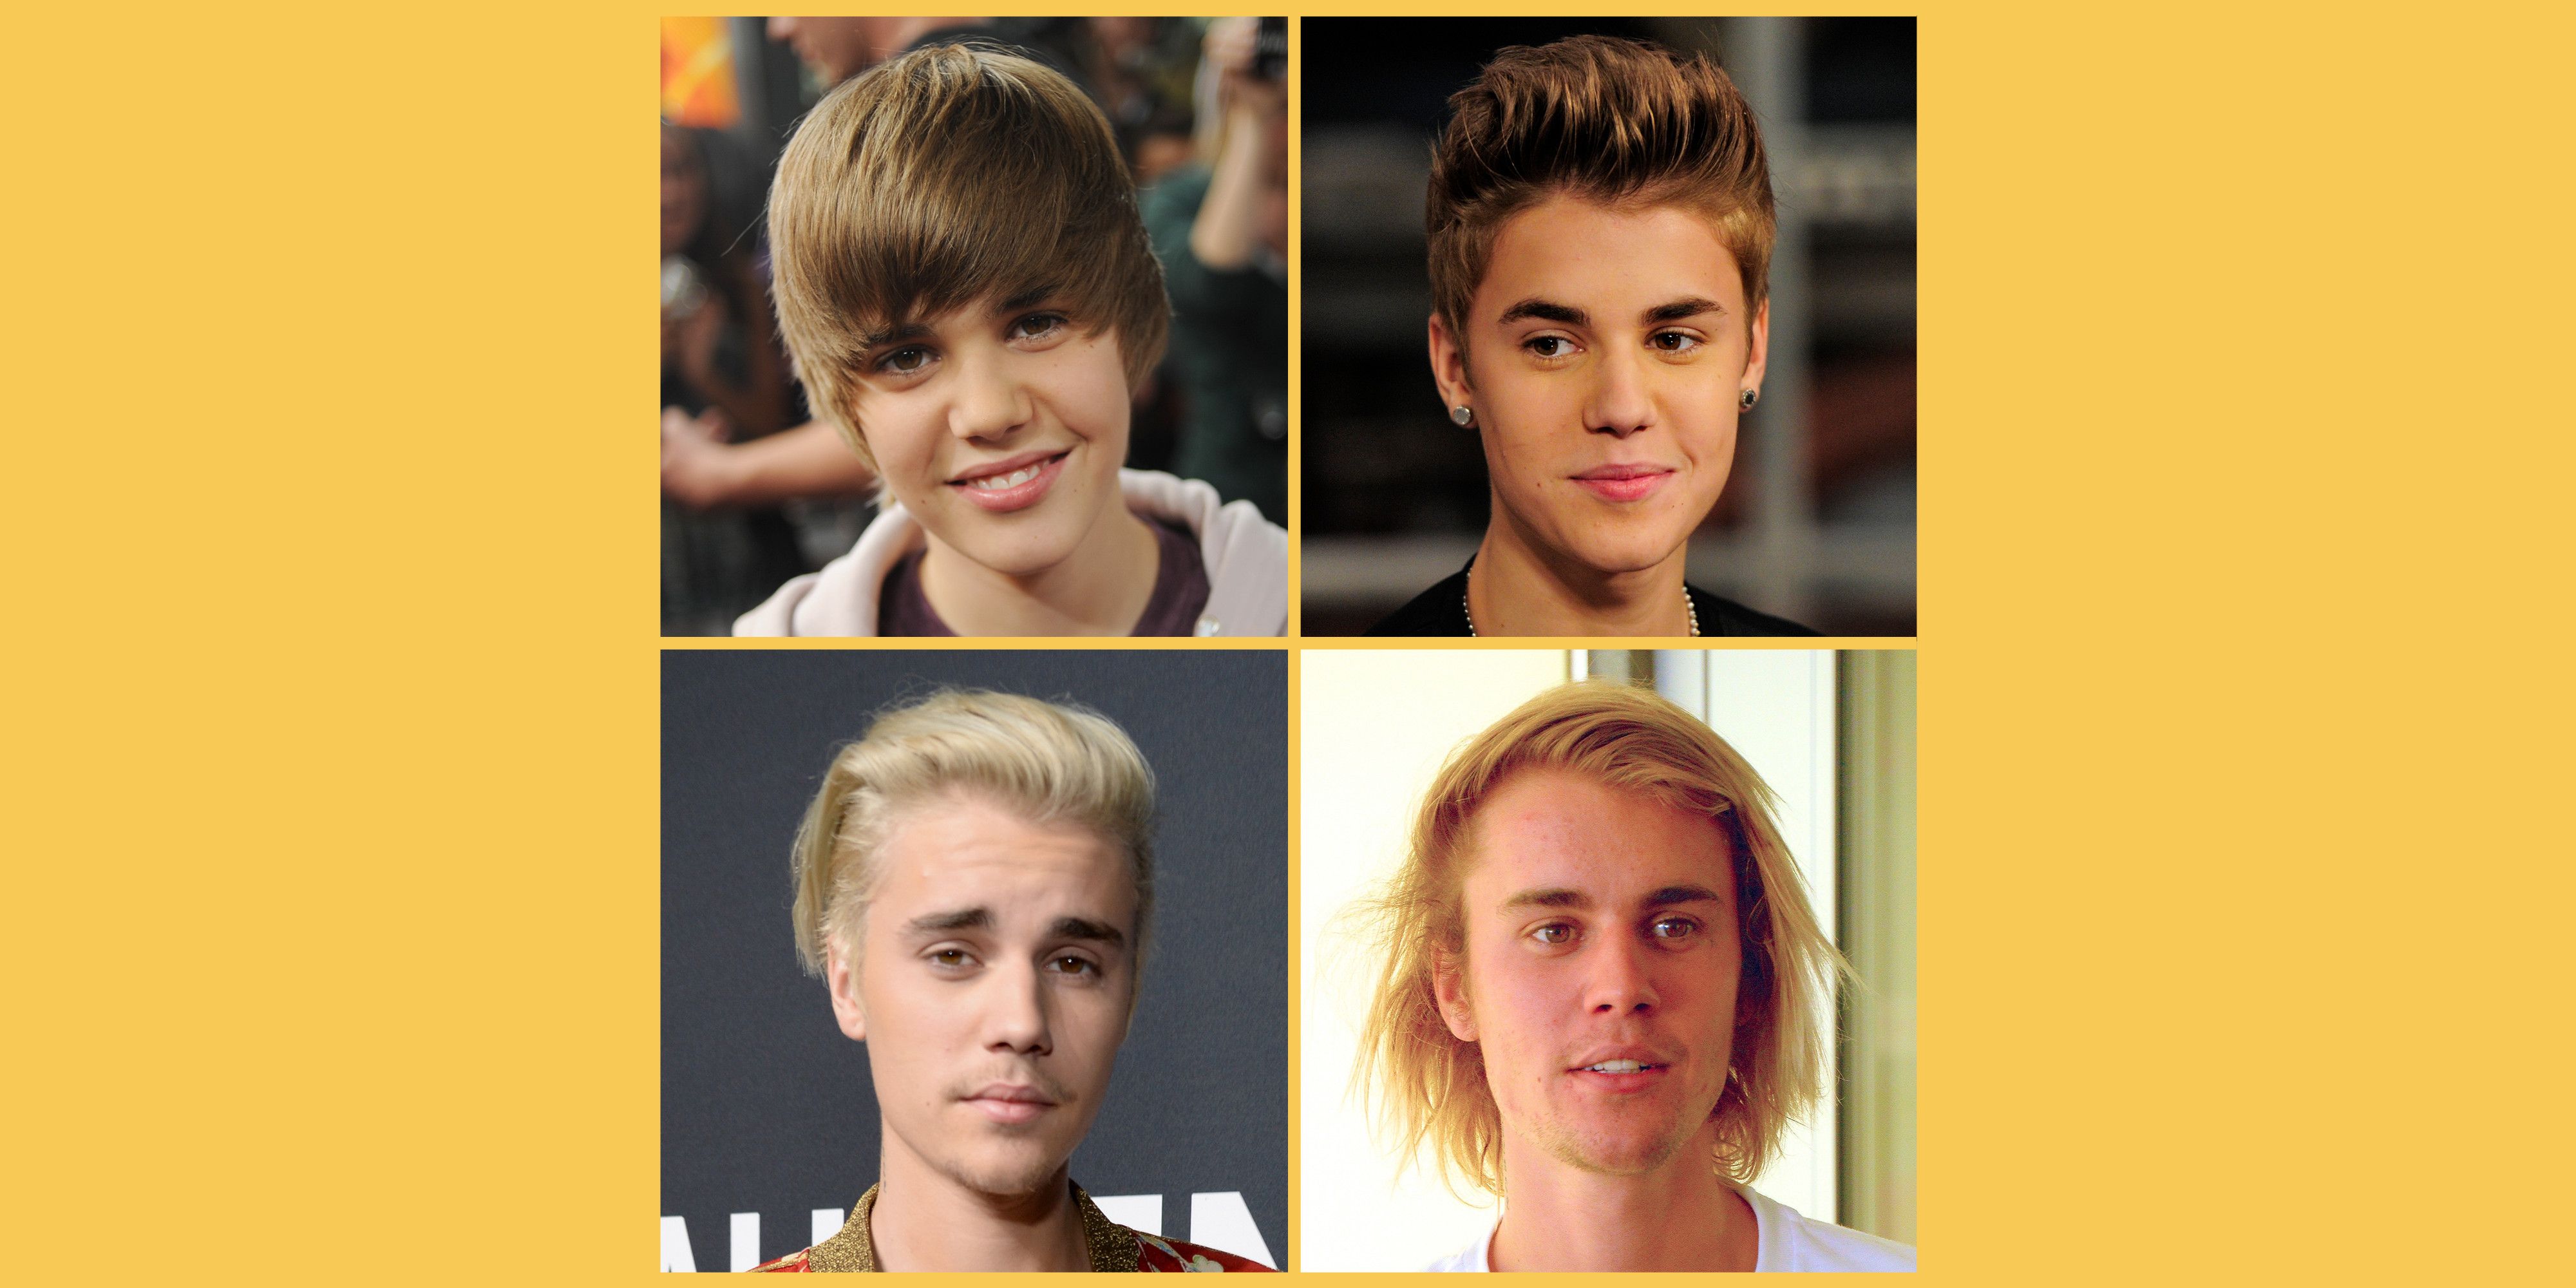 Justin Bieber's haircut in demand | Stuff.co.nz